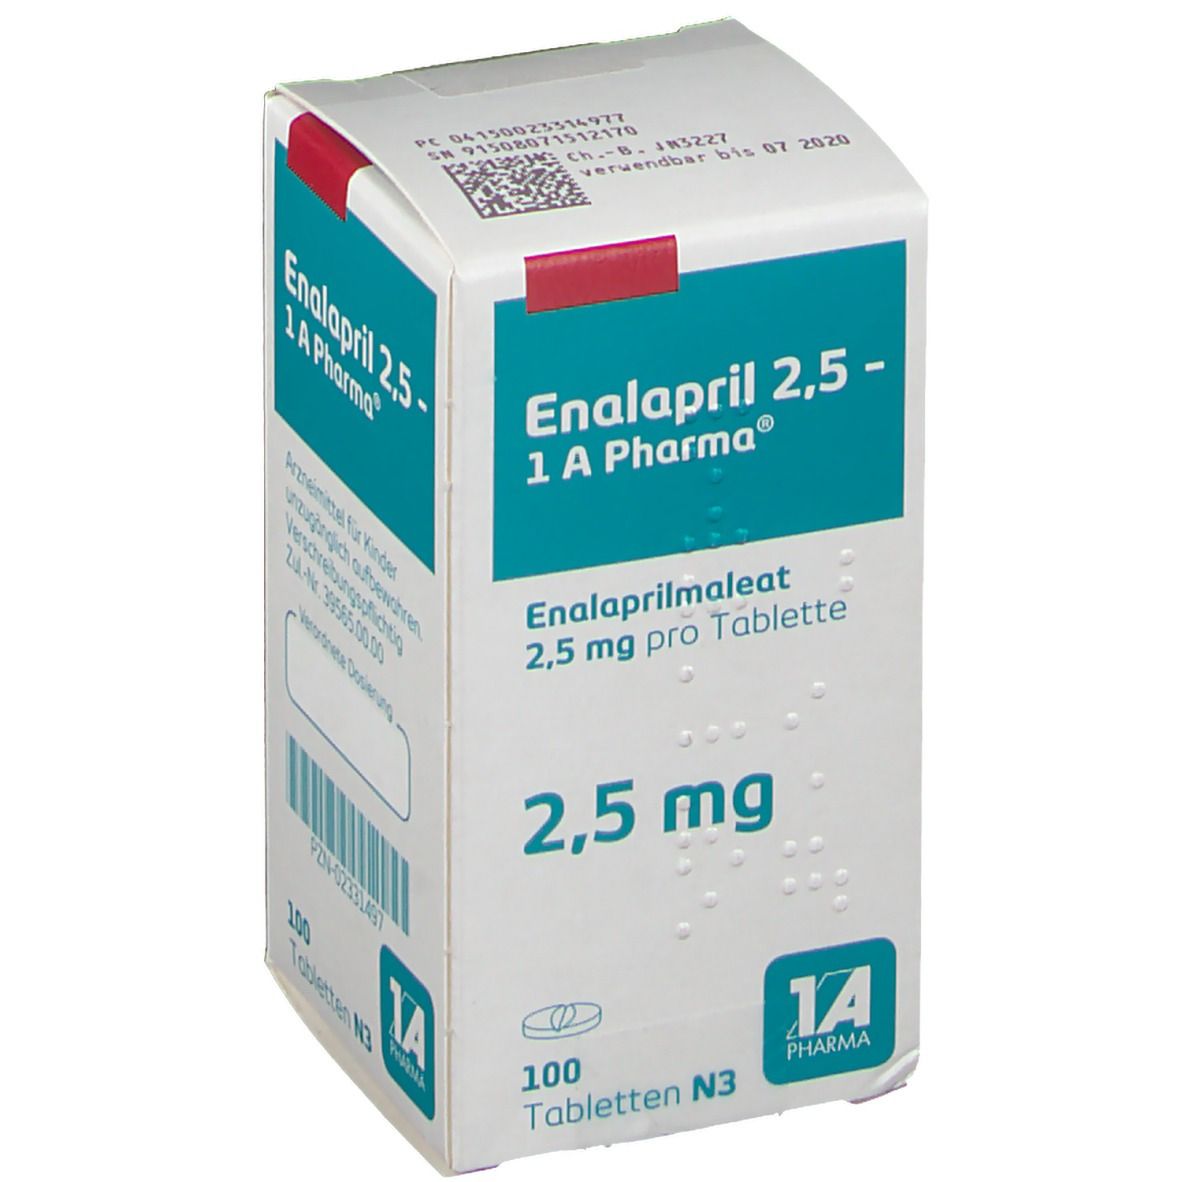 Enalapril 2.5 - 1A Pharma®